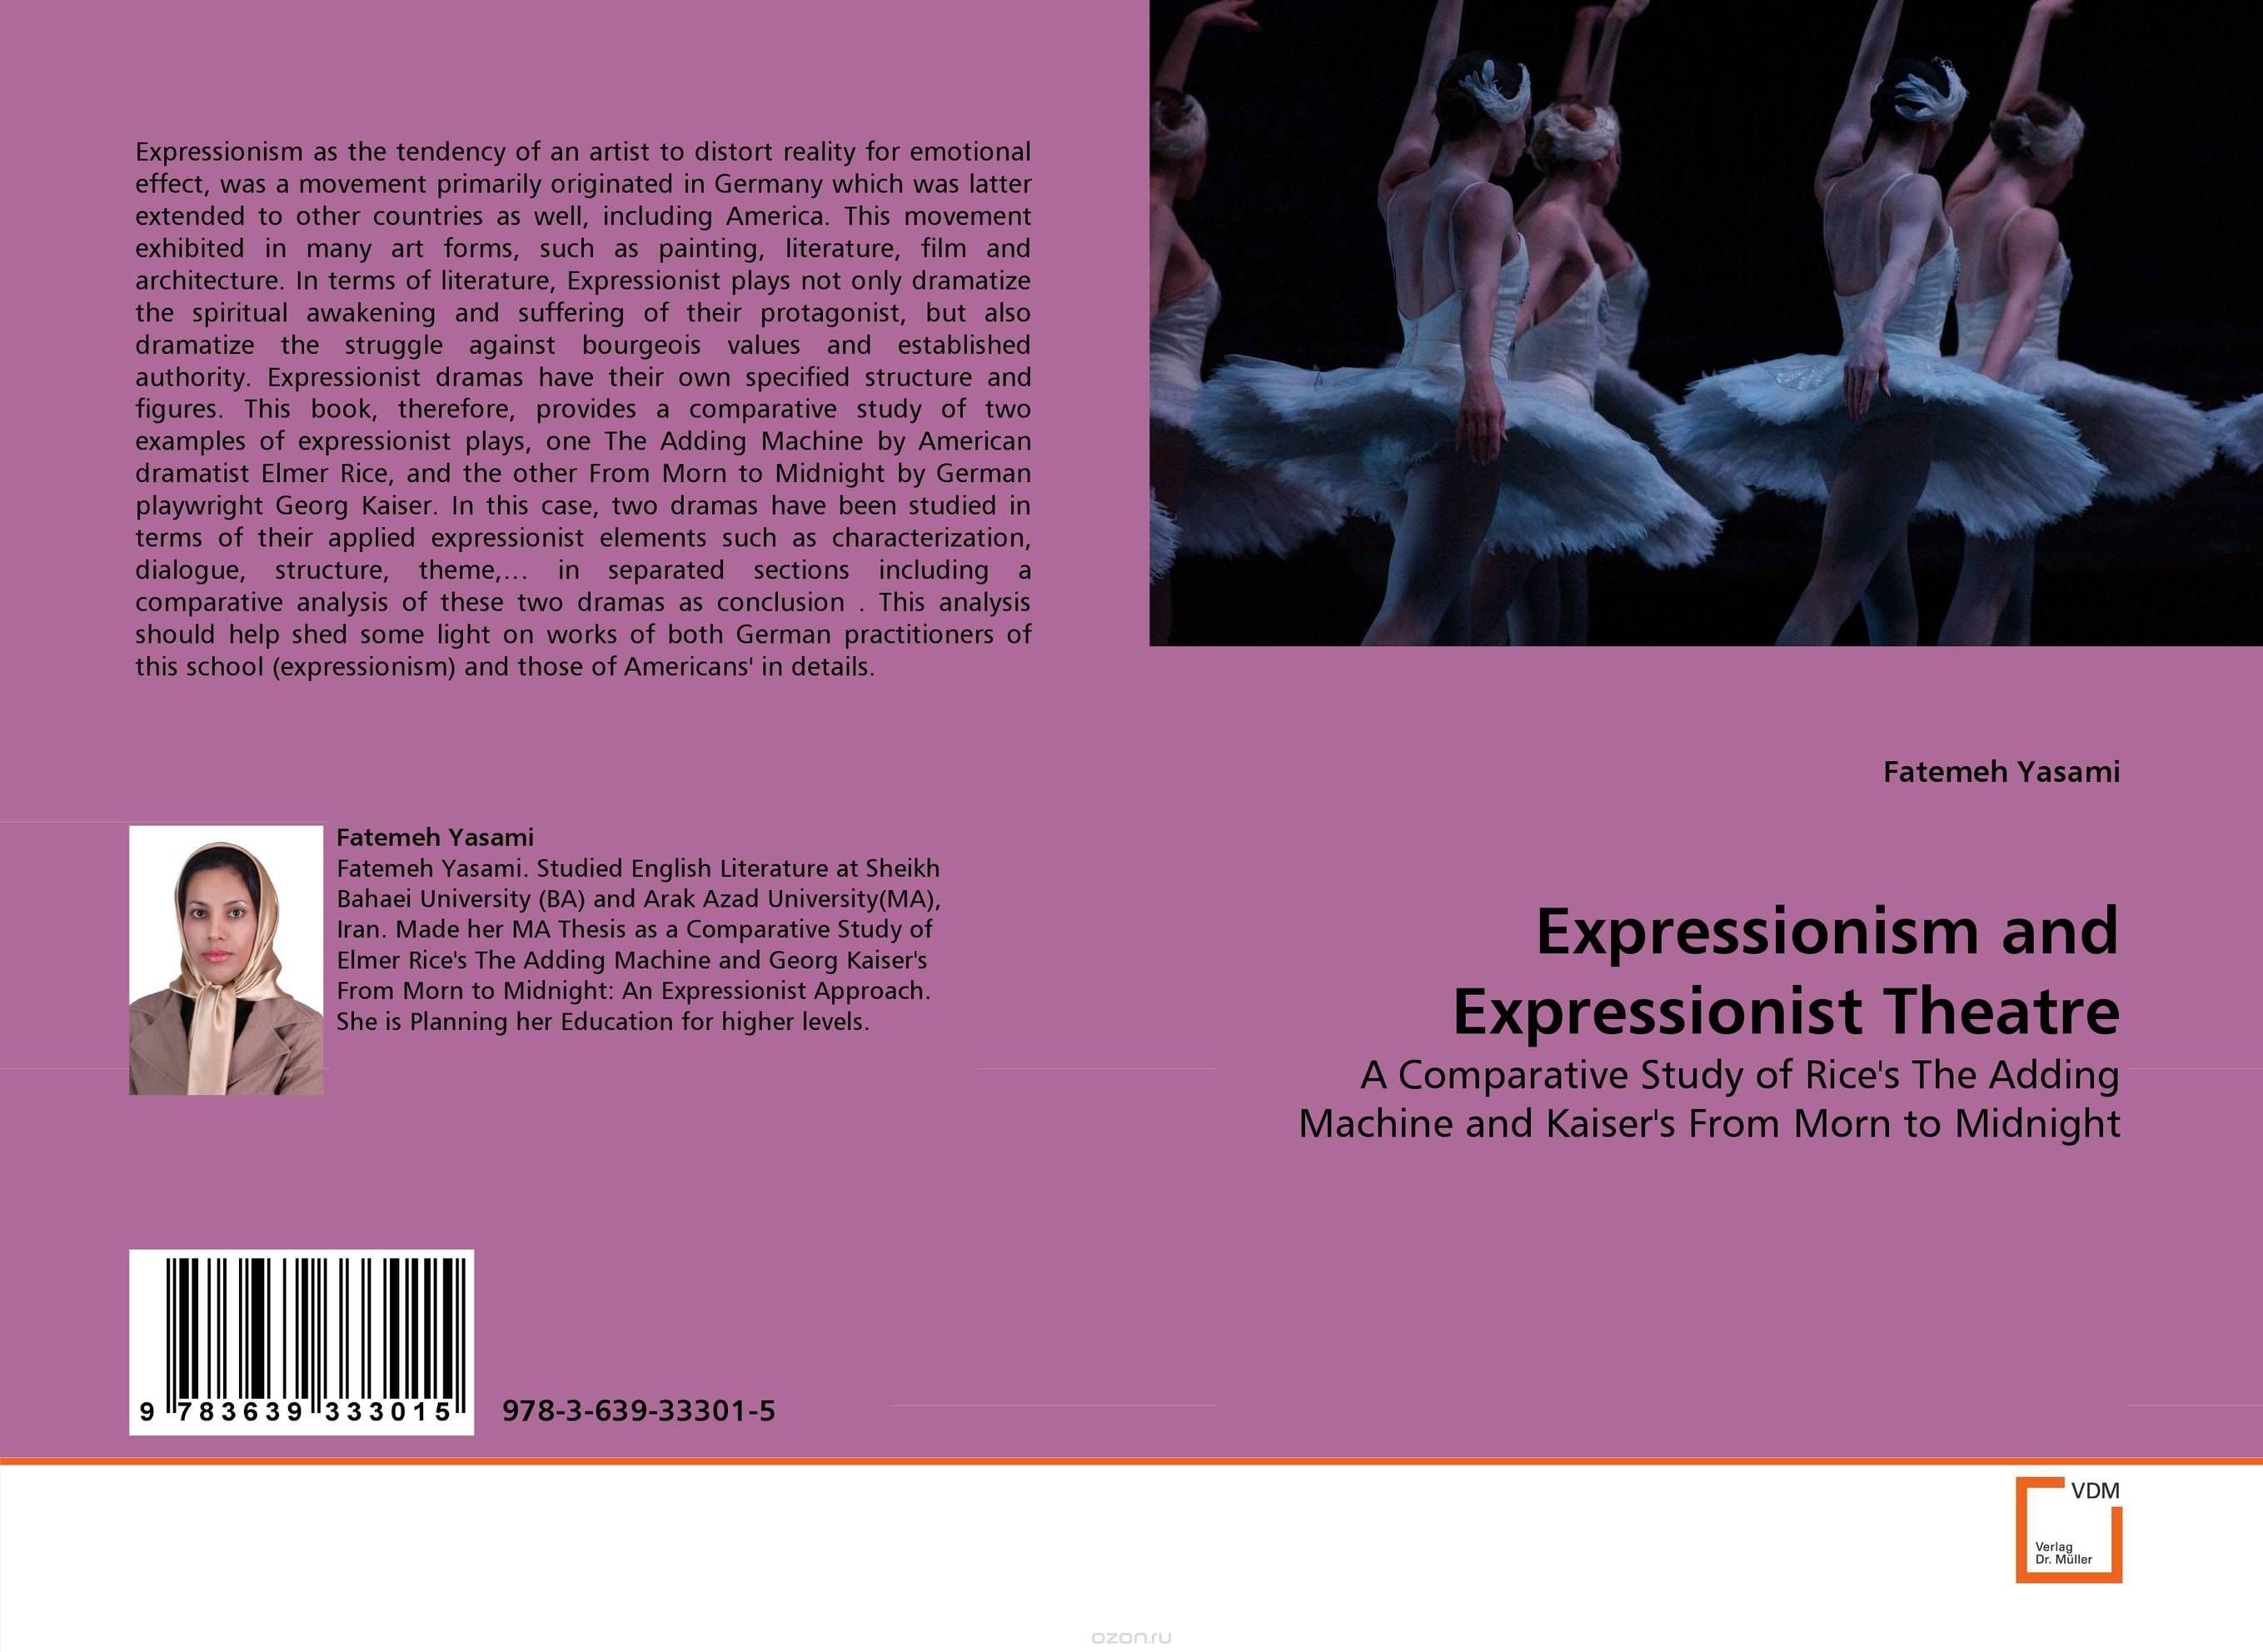 Скачать книгу "Expressionism and Expressionist Theatre"